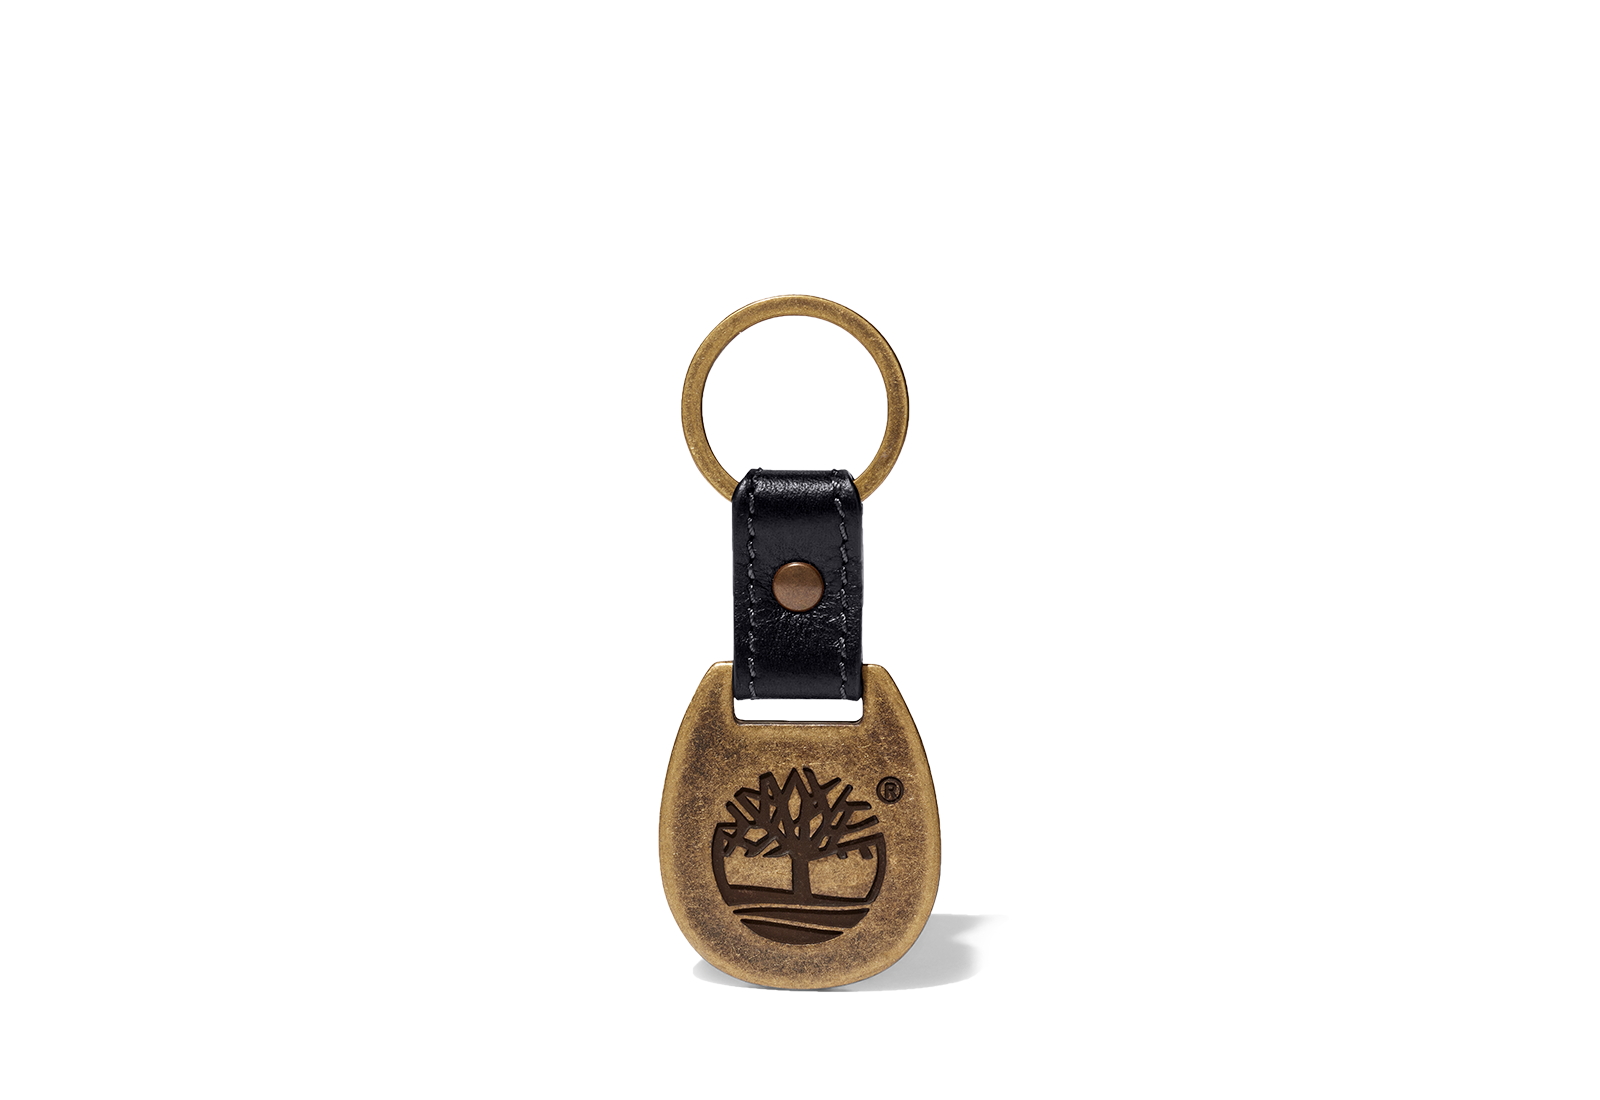 Timberland Kiegészítők Credit Card And Key Ring Gift Set